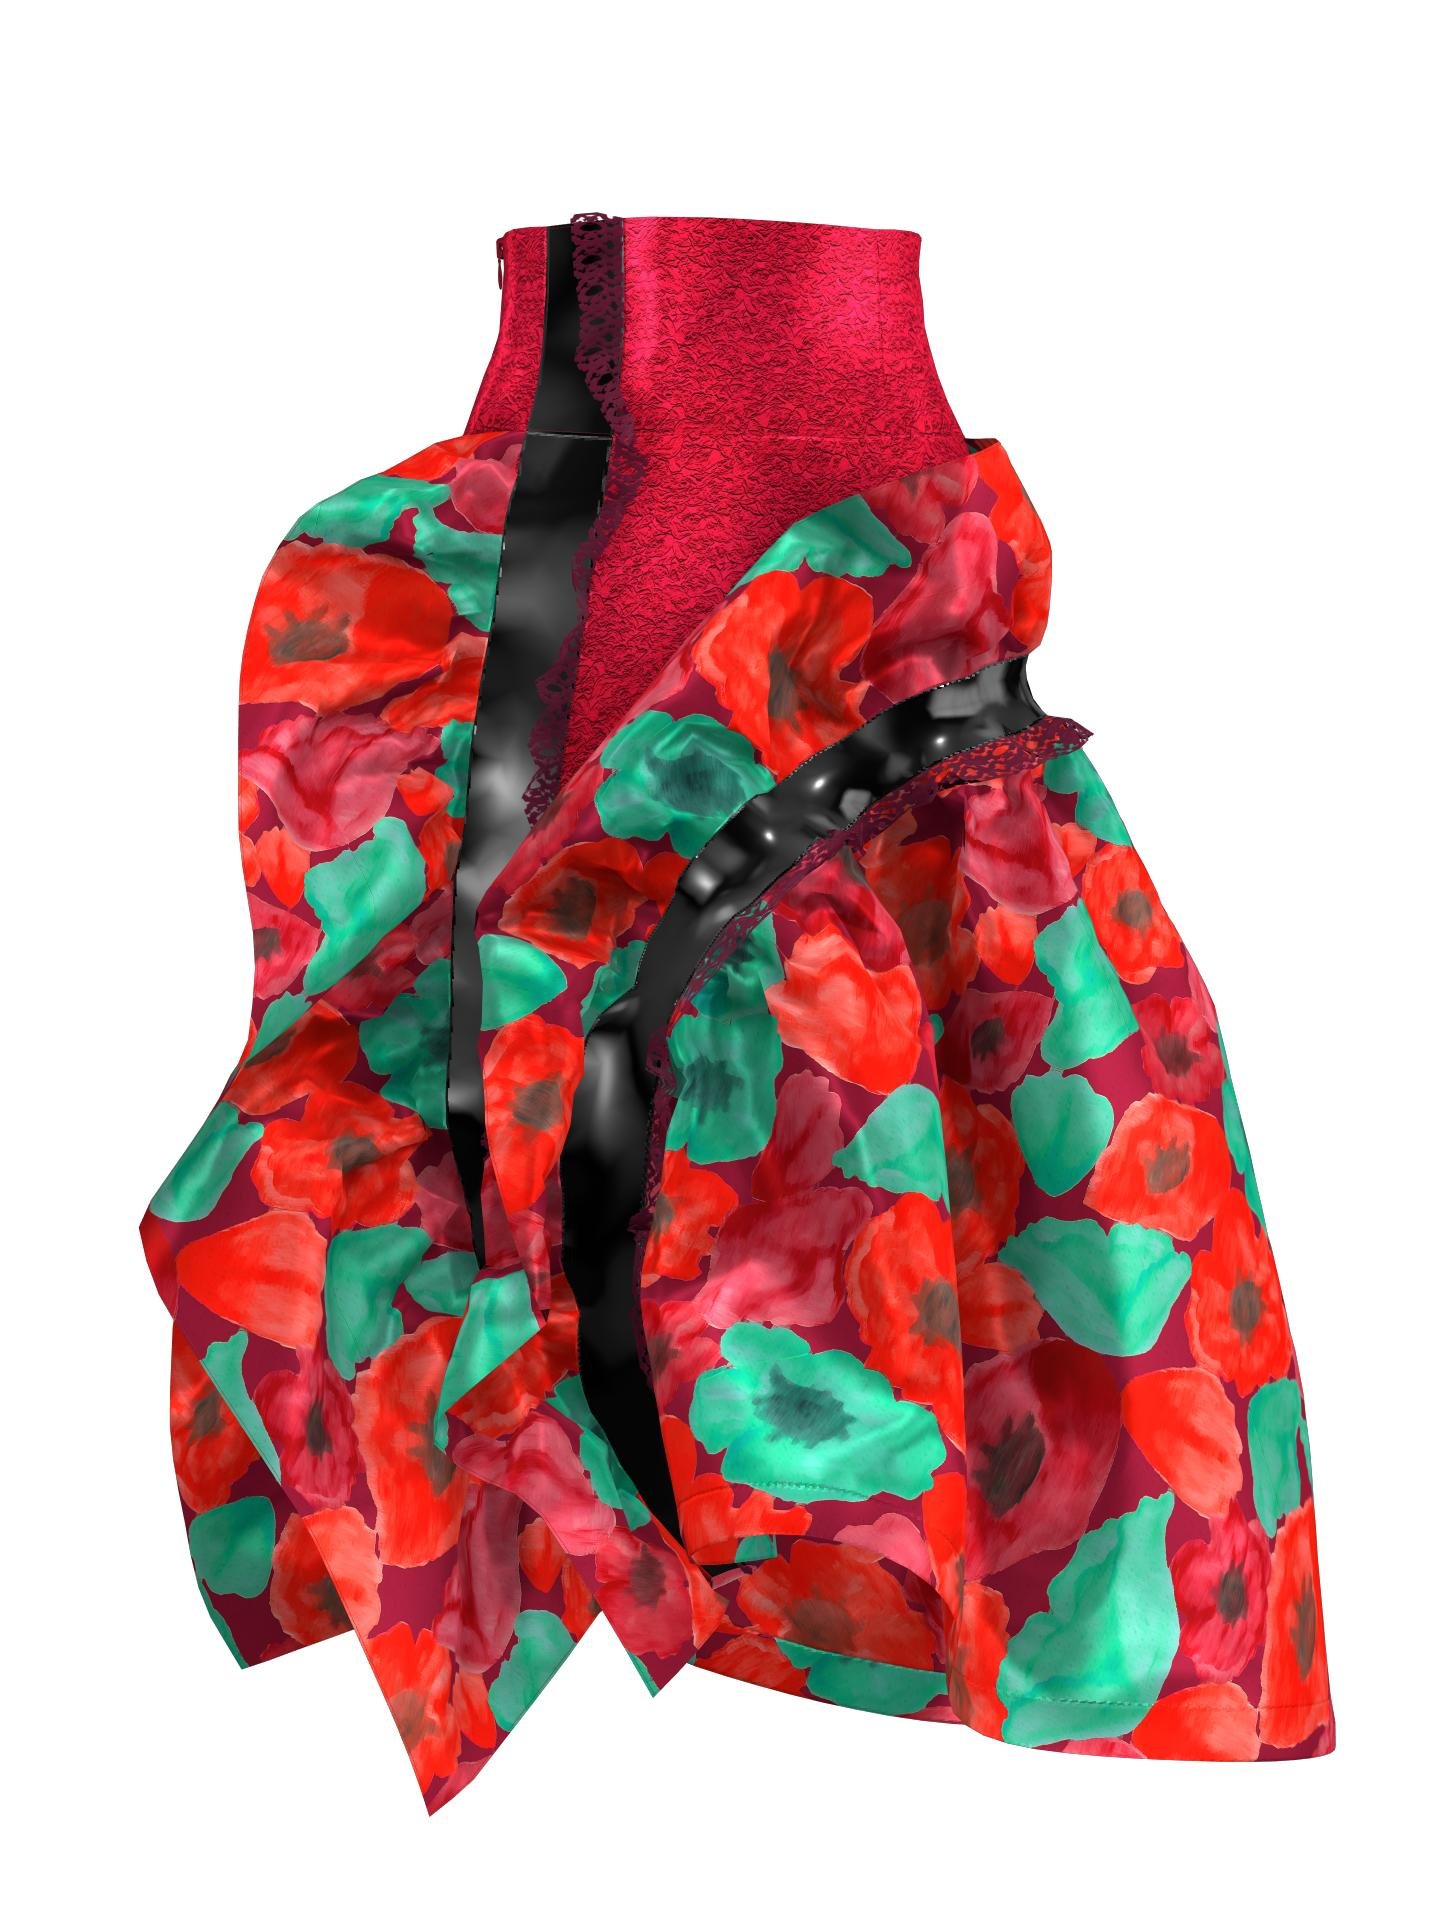 Taffeta Poppy Skirt by ALEXANDER KNIGHT